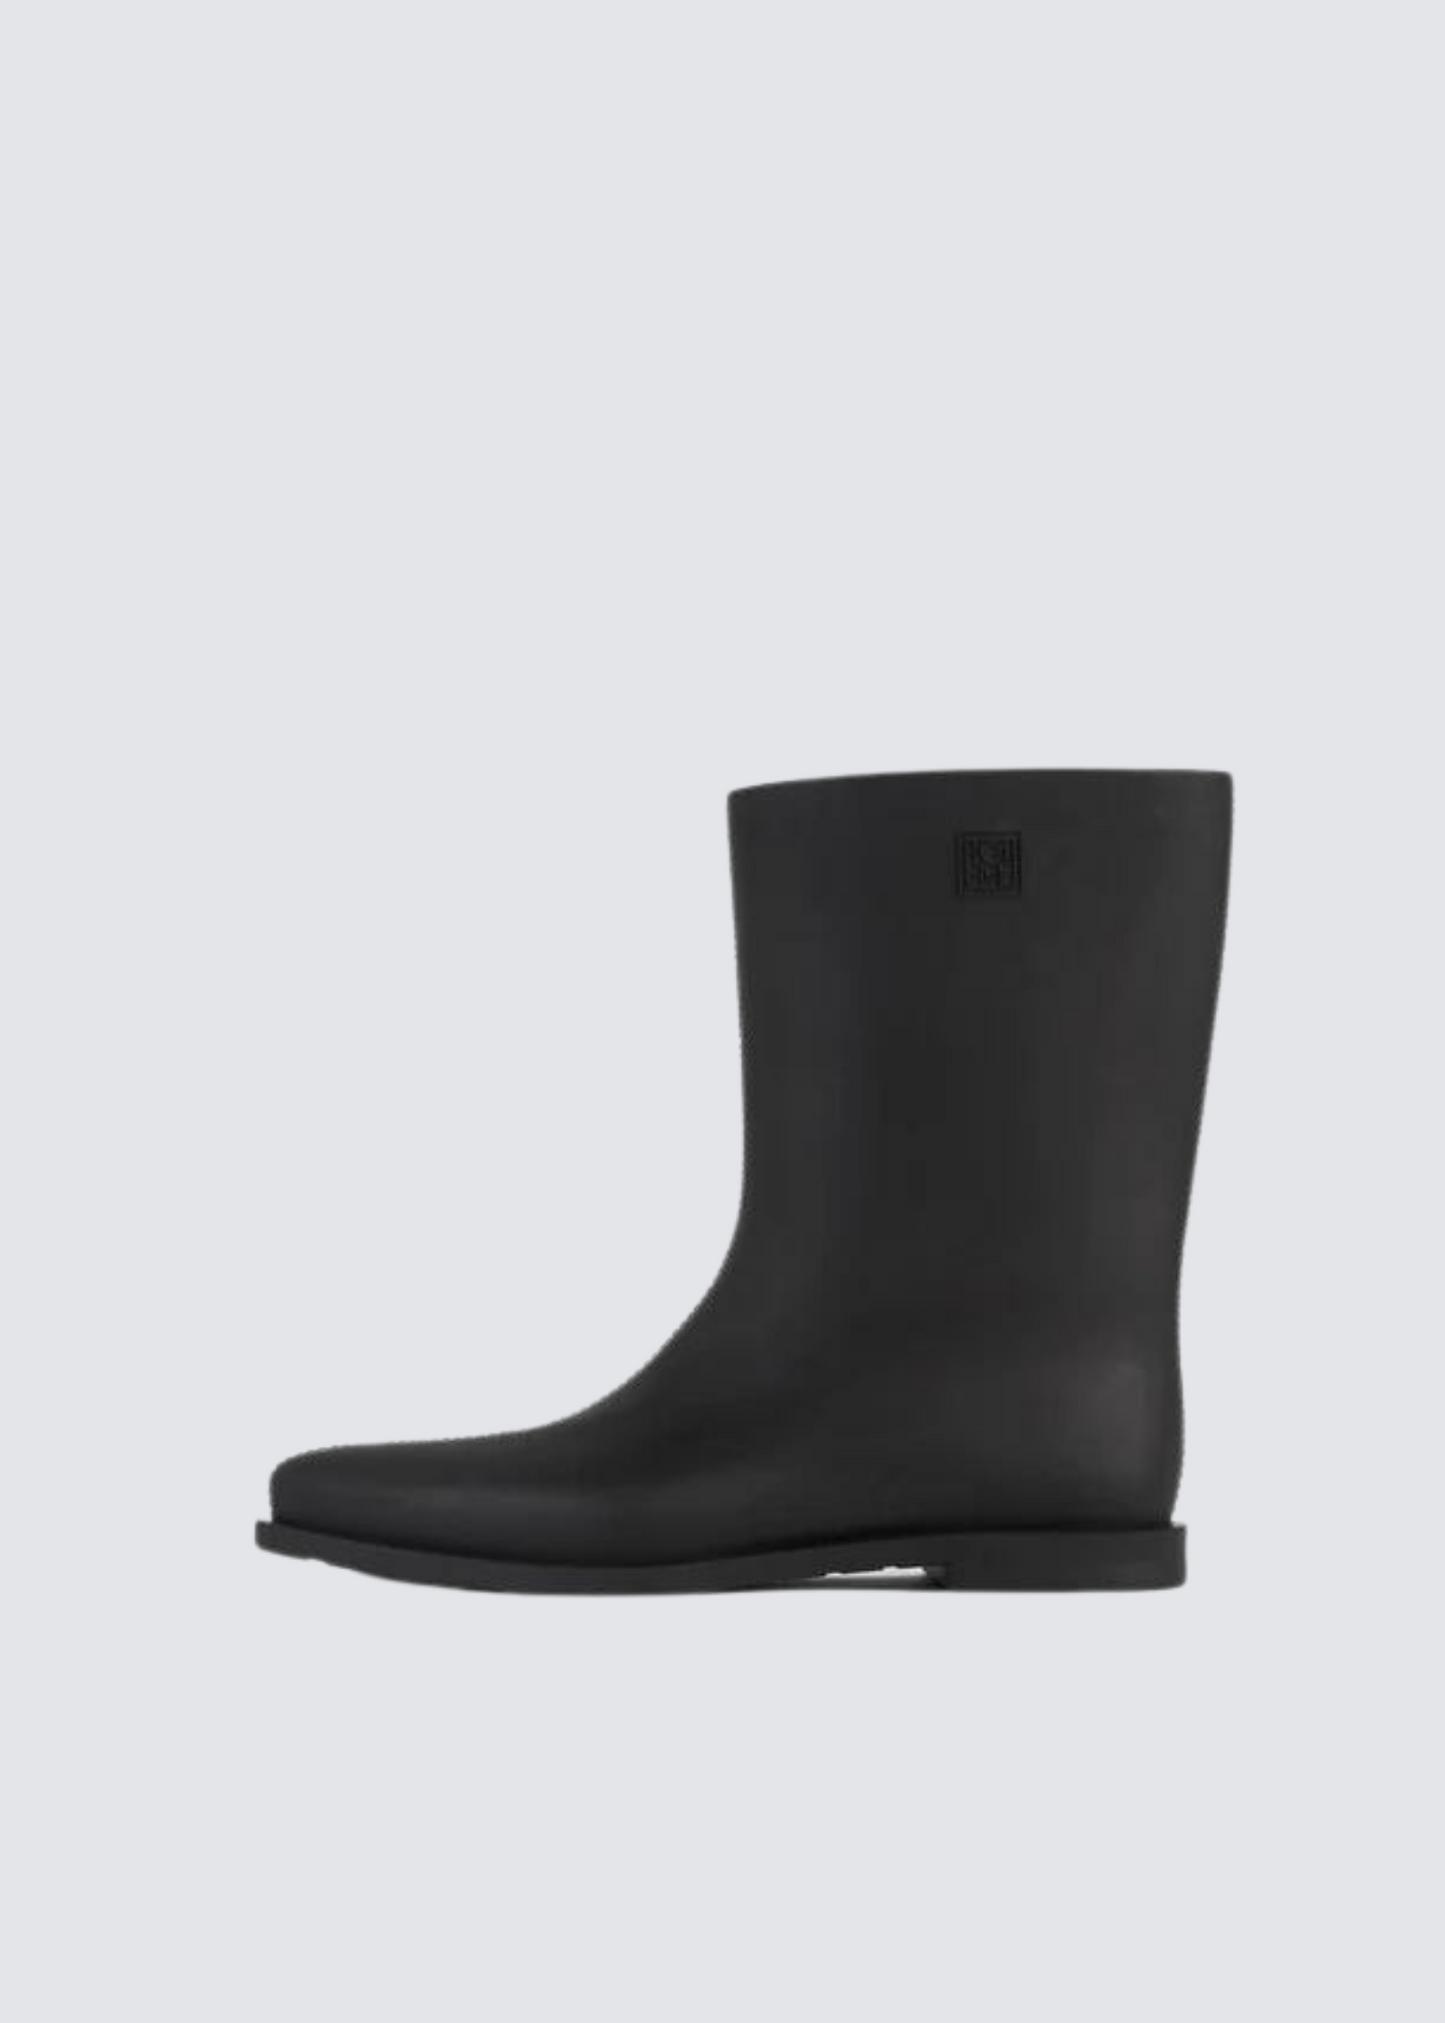 The Rain Boot, Black, Gummistiefel